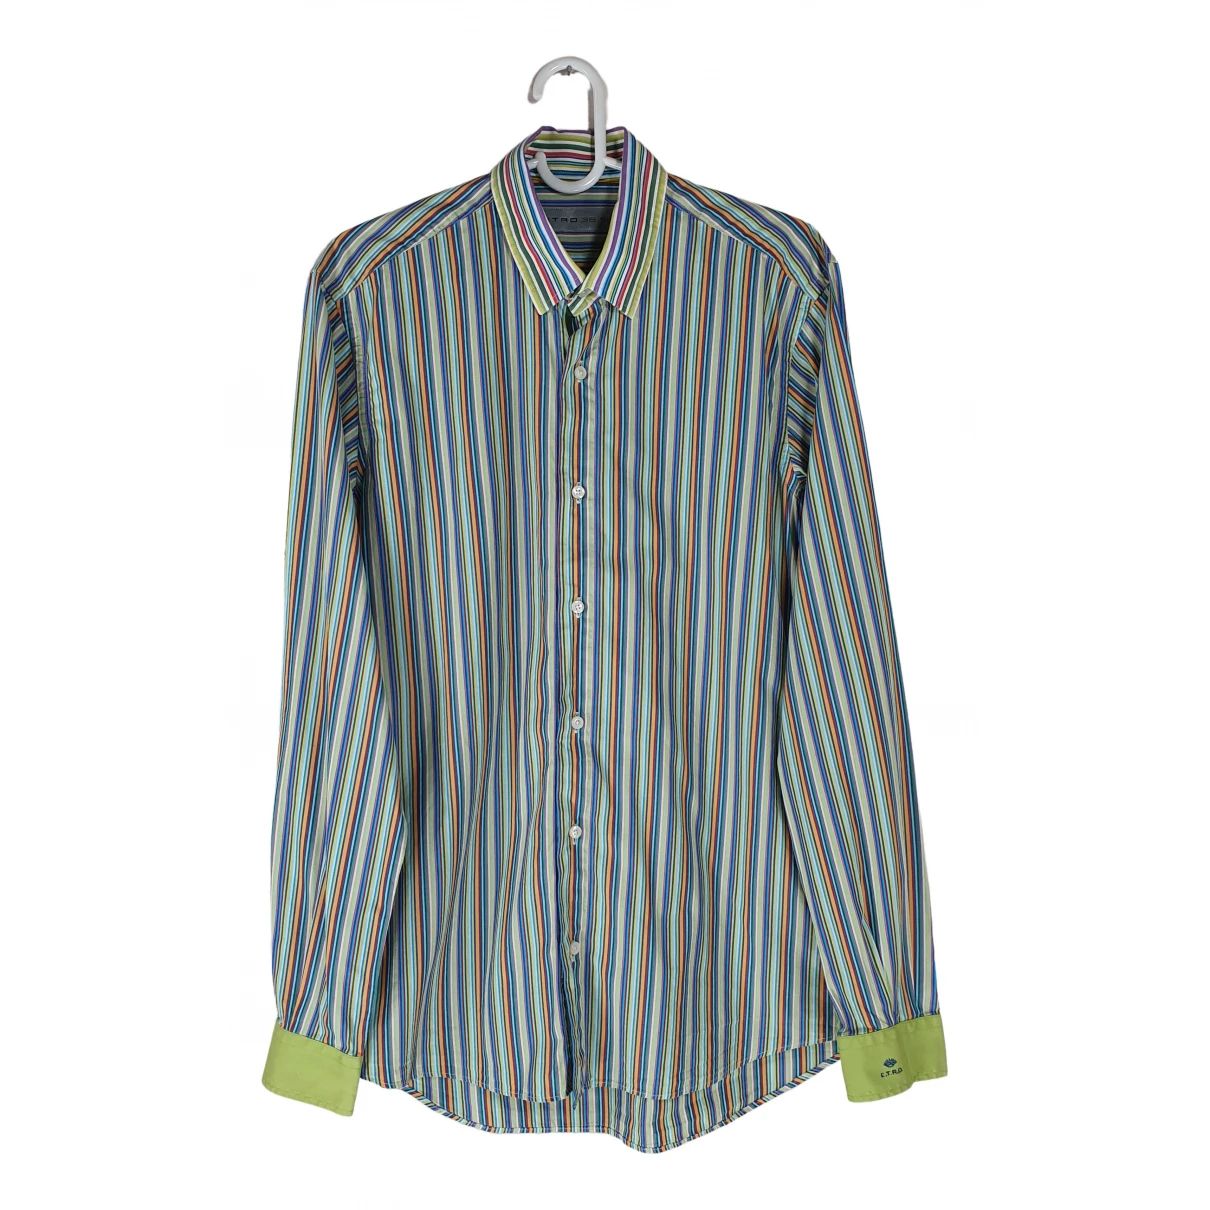 clothing Etro shirts for Male Cotton 38 EU (tour de cou / collar). Used condition